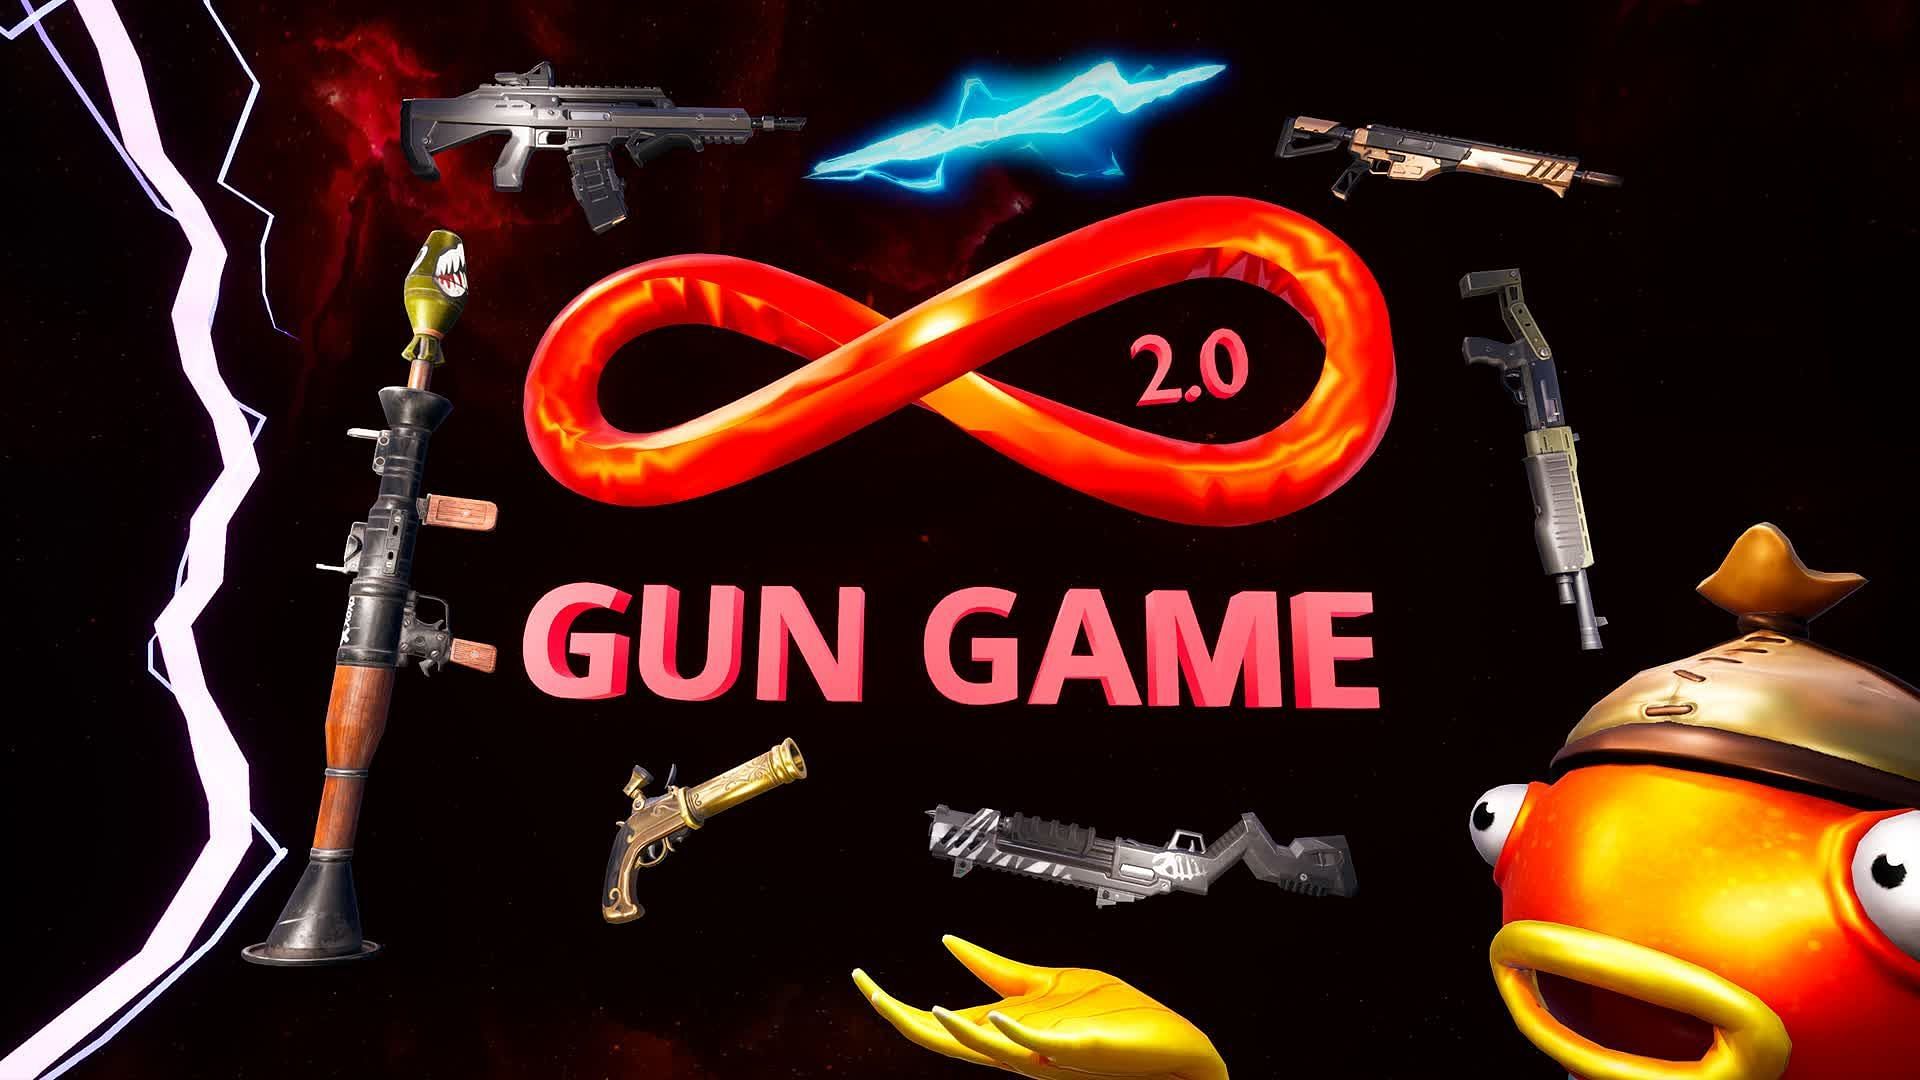 Fortnite Infinite Gun Game 2.0: UEFN map code, how to play, and more